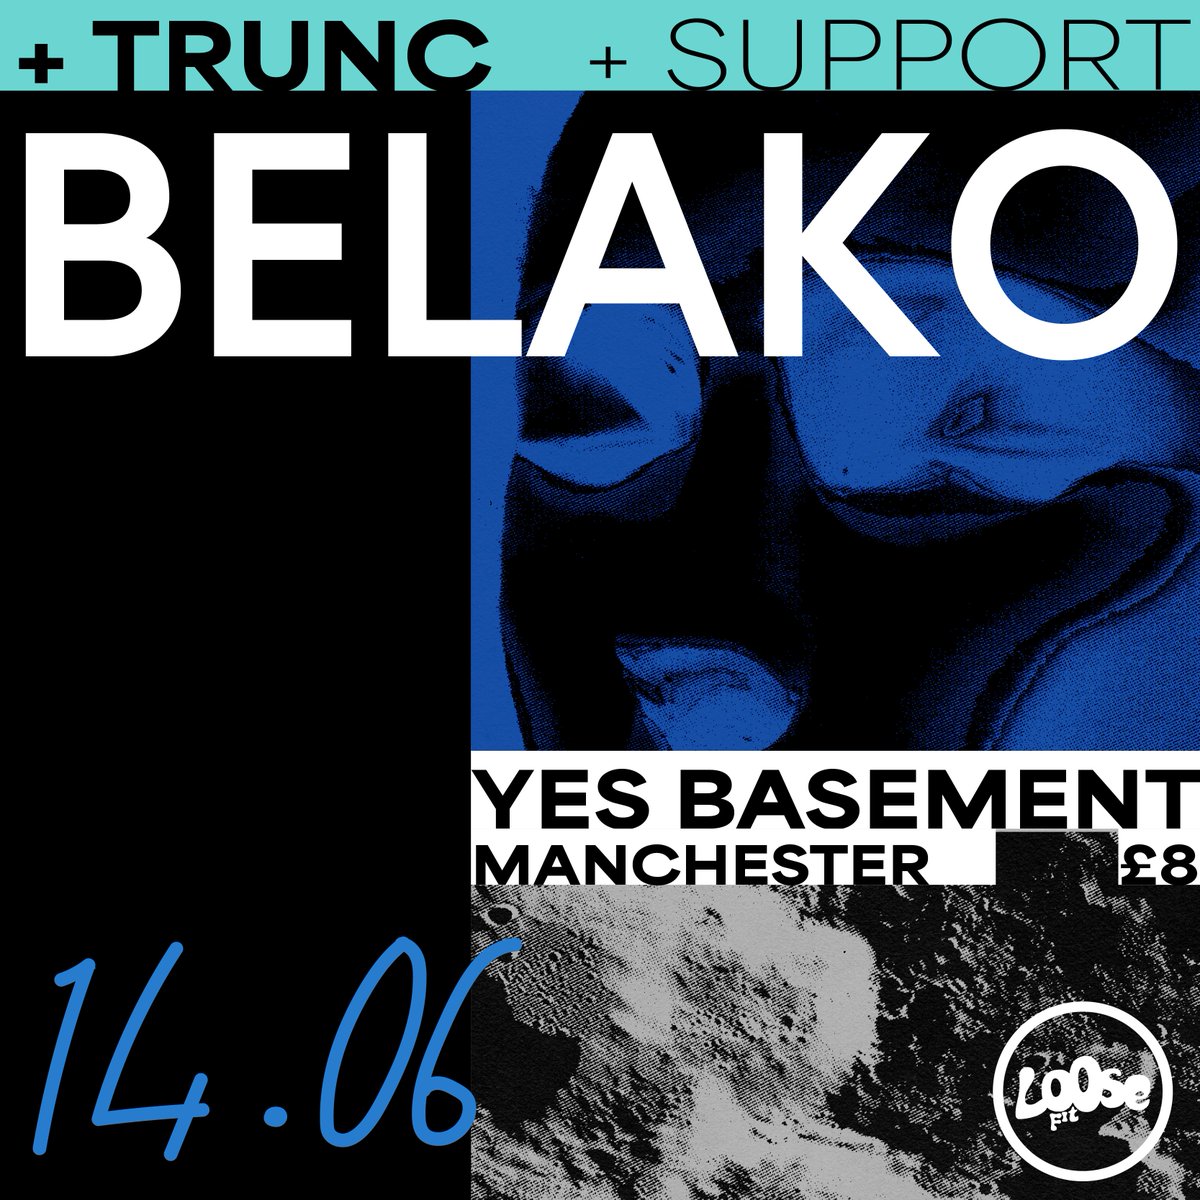 Wednesday 13th June - Manchester - Yes Basement

gigantic.com/belako-tickets…